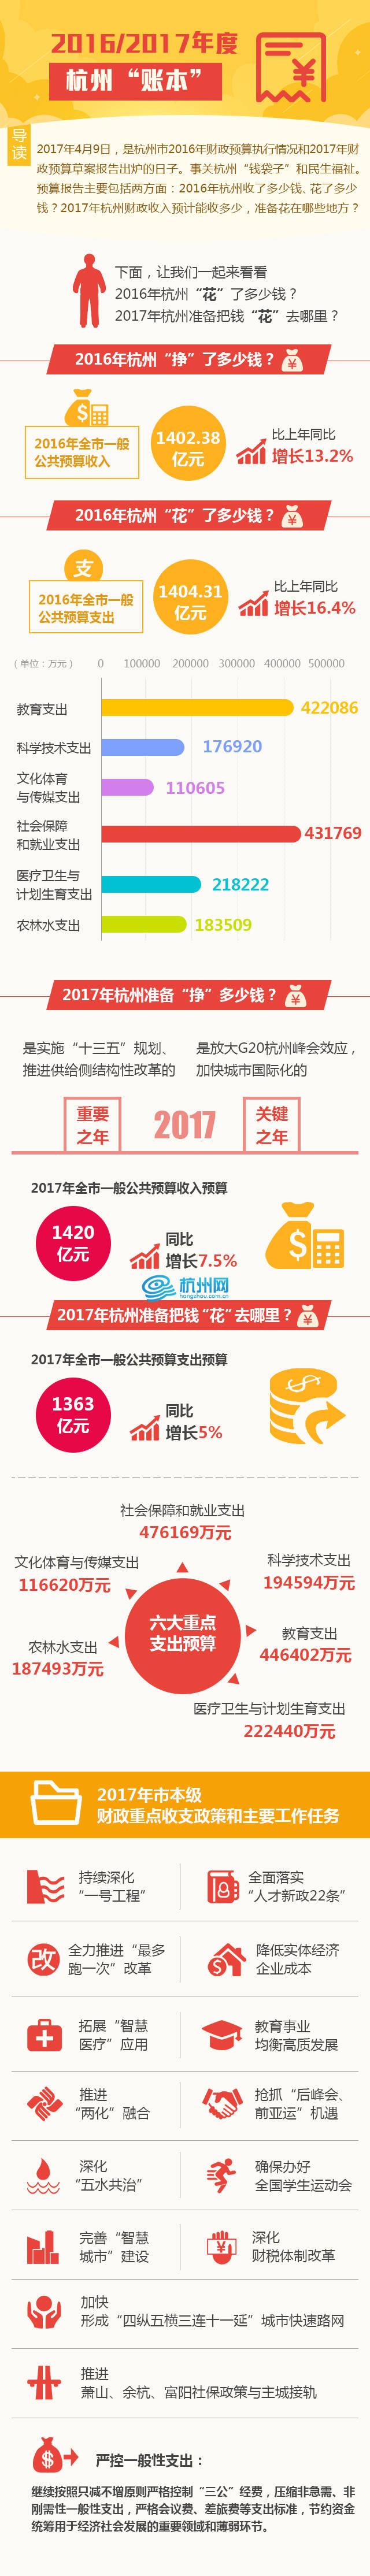 2016/2017年度杭州“账本”